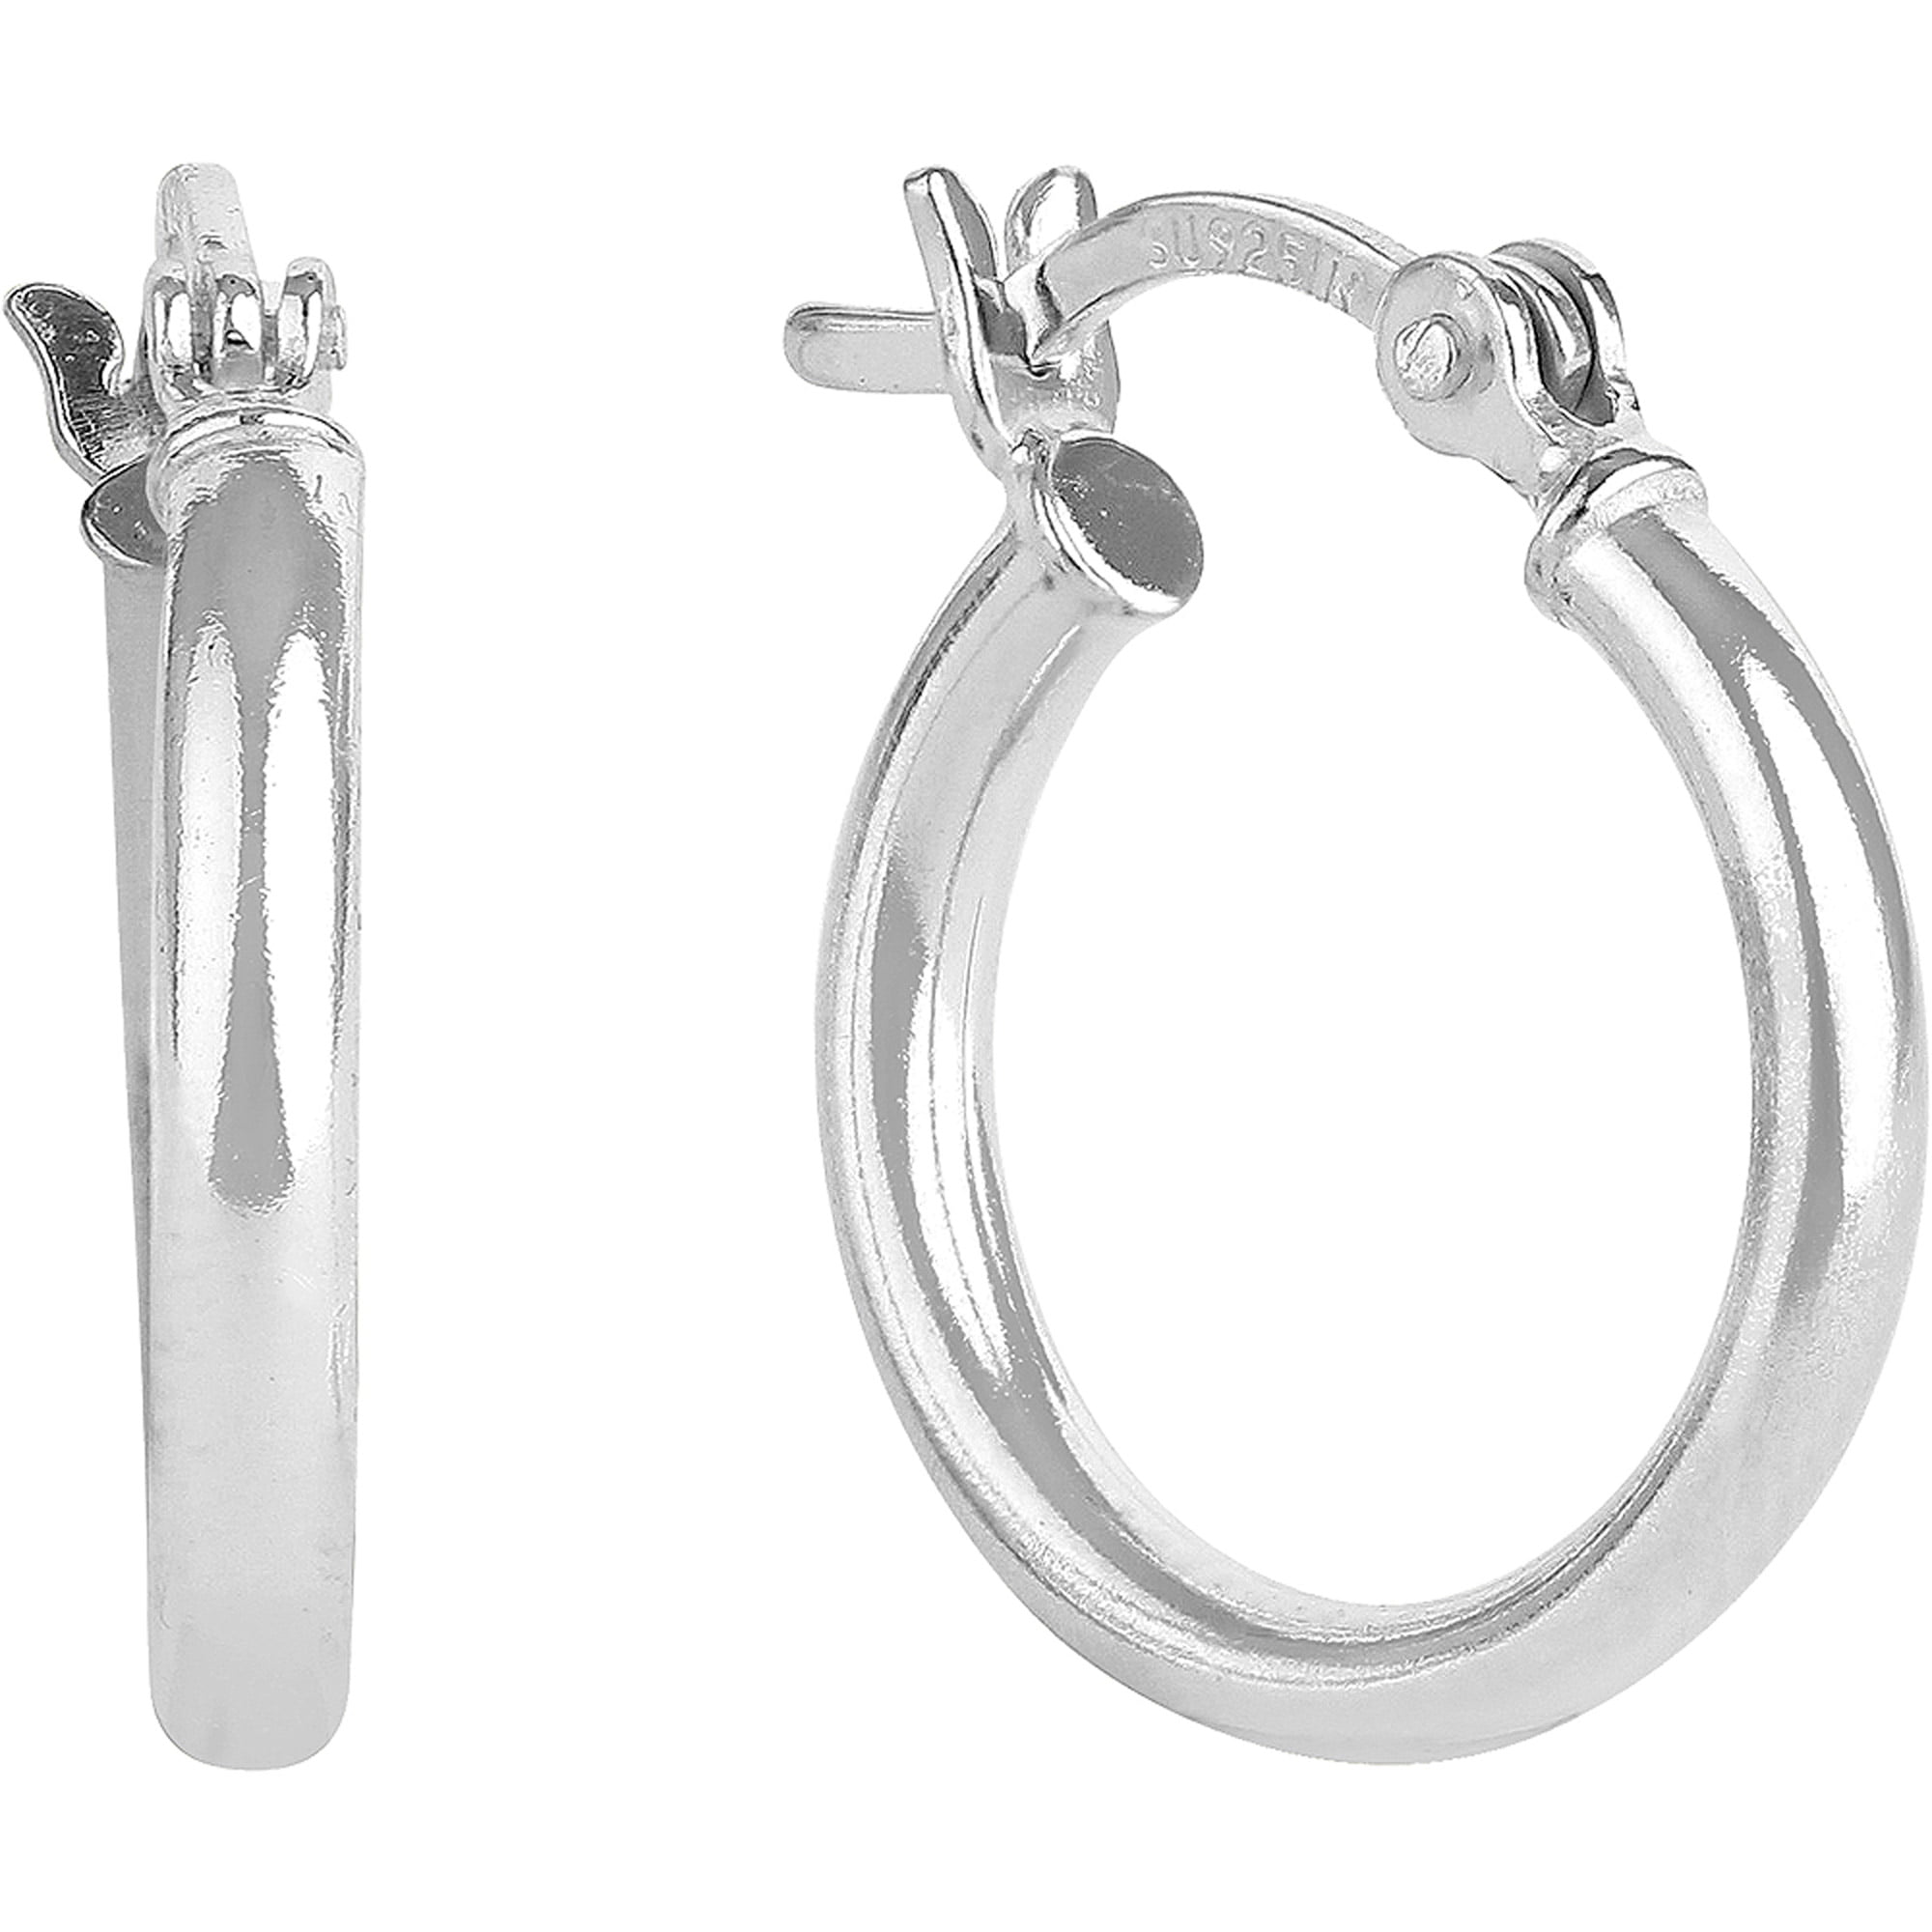 Brilliance Fine Jewelry Sterling Silver Click Top Hoop Earrings, 15mm.